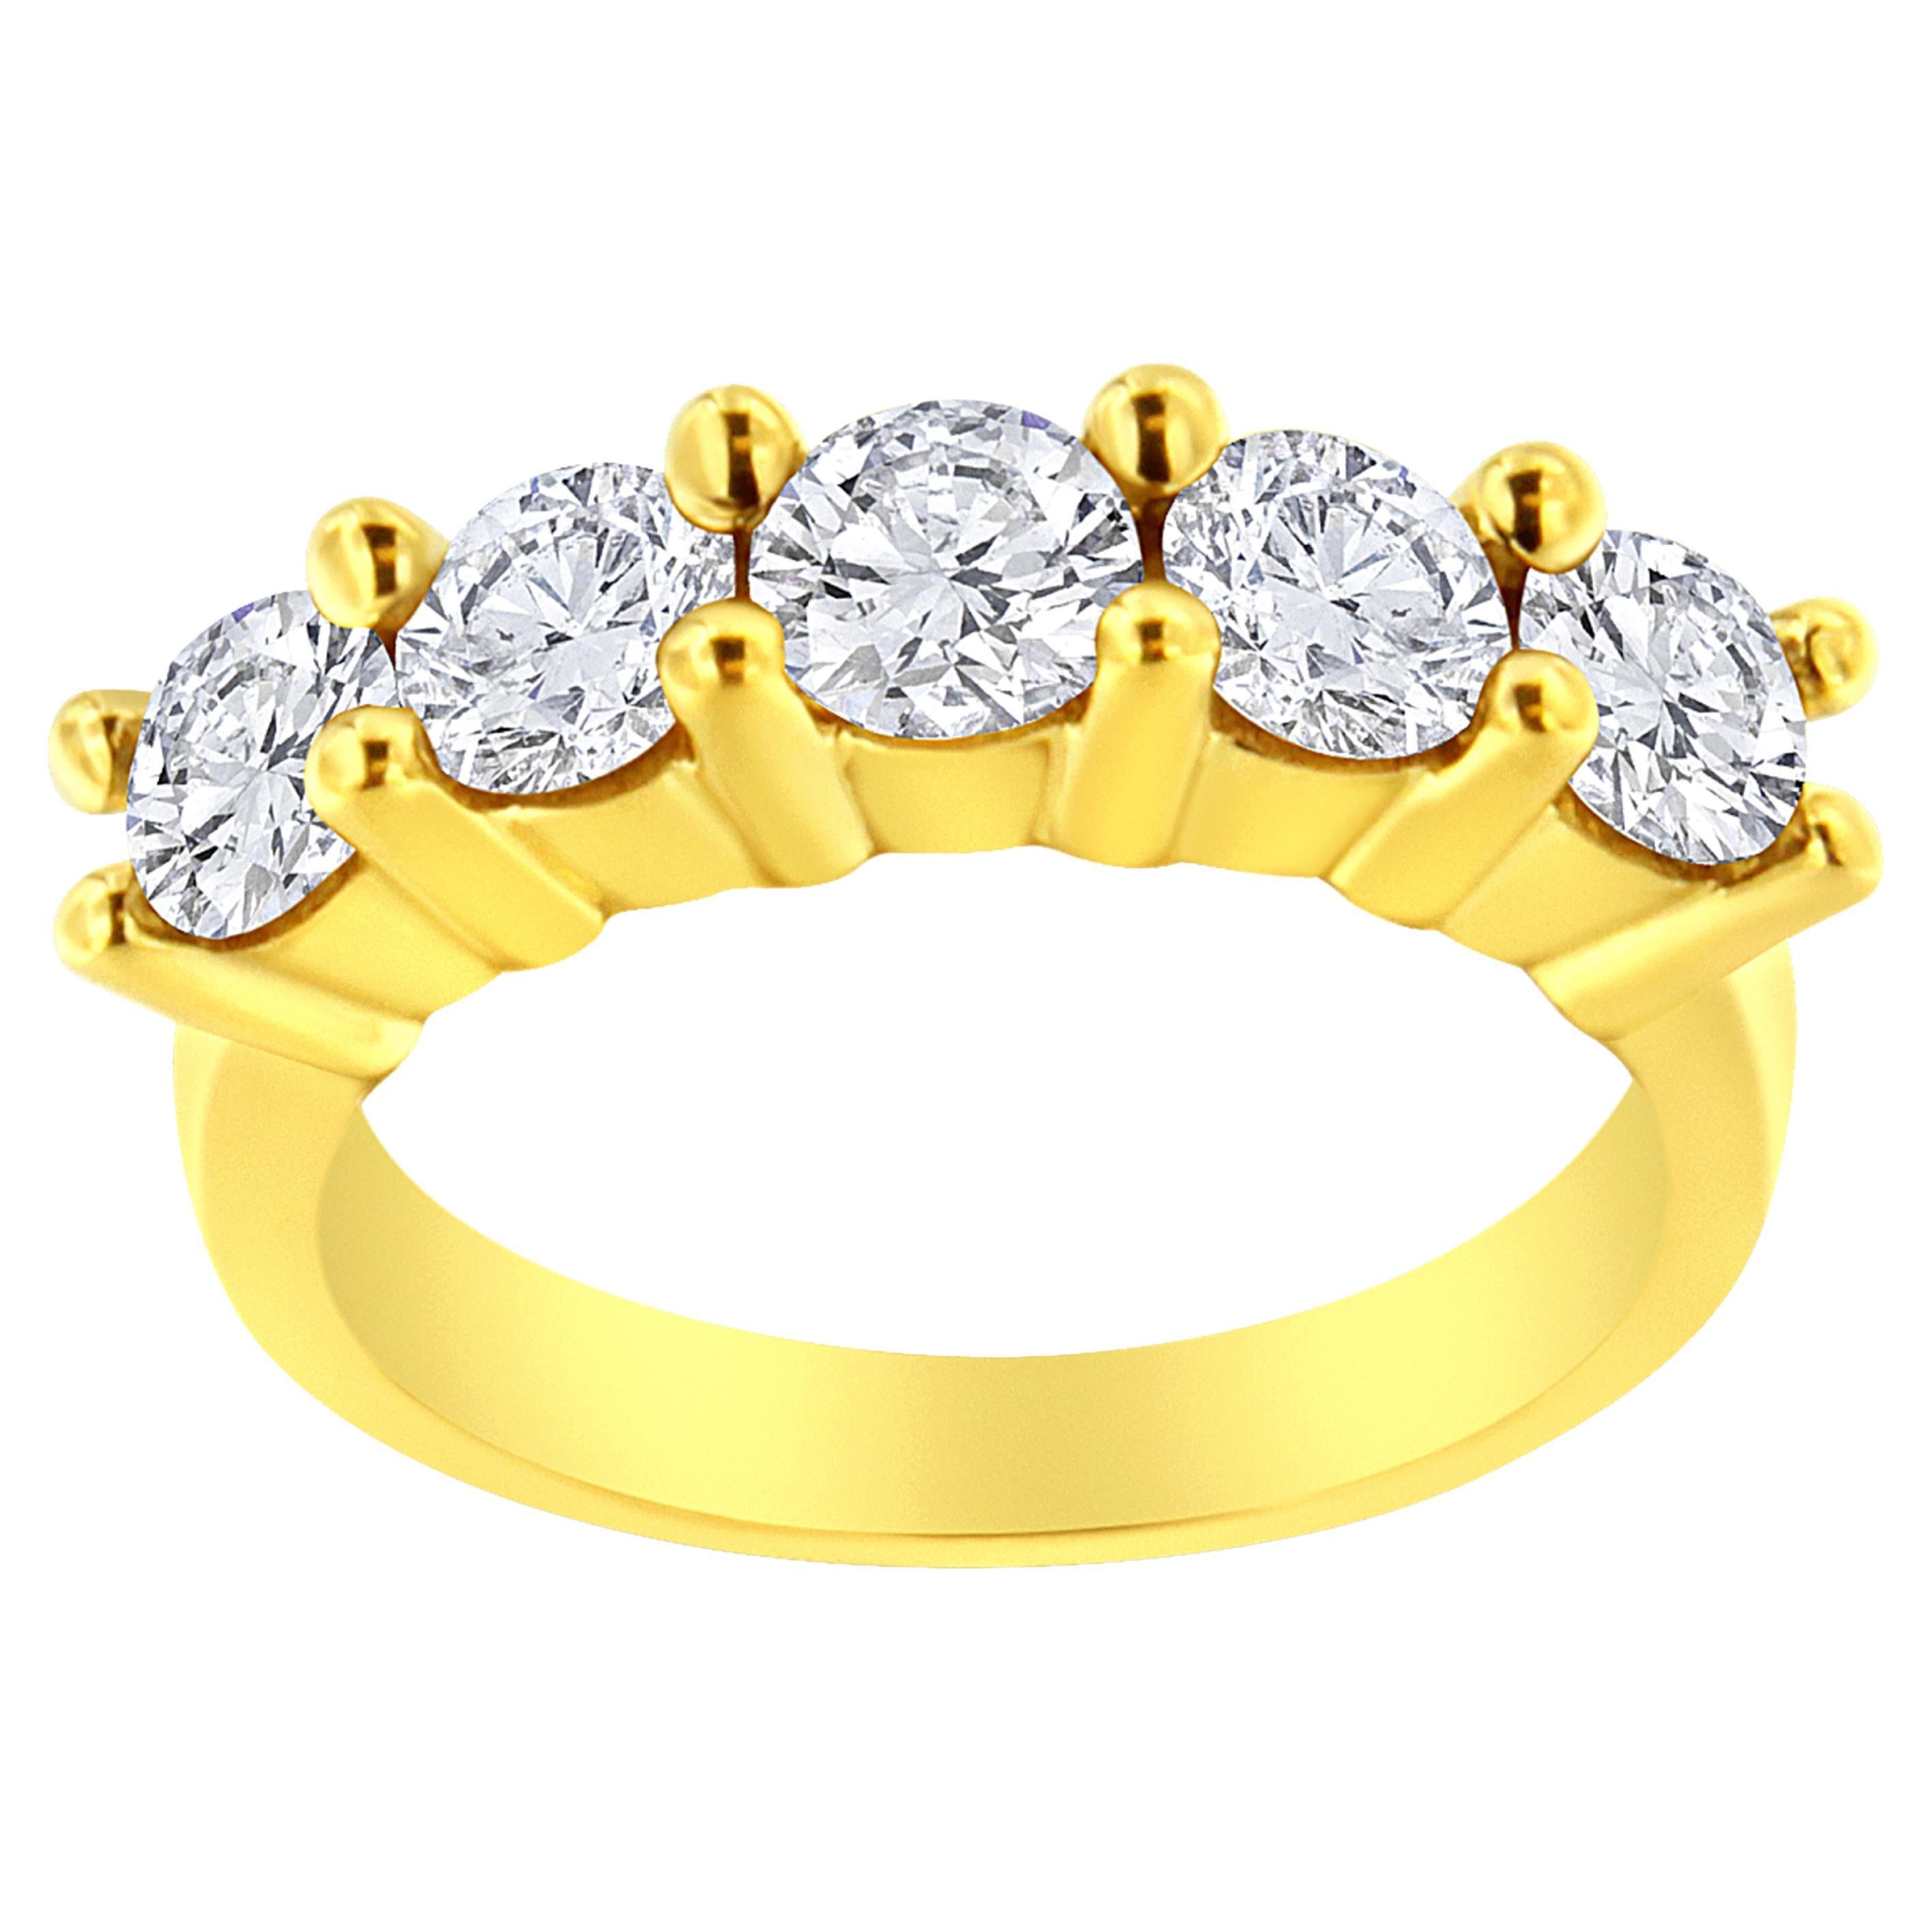 Verlobungsring, Gelbgold vergoldet Sterlingsilber 2,0 Karat Diamant 5 Stein